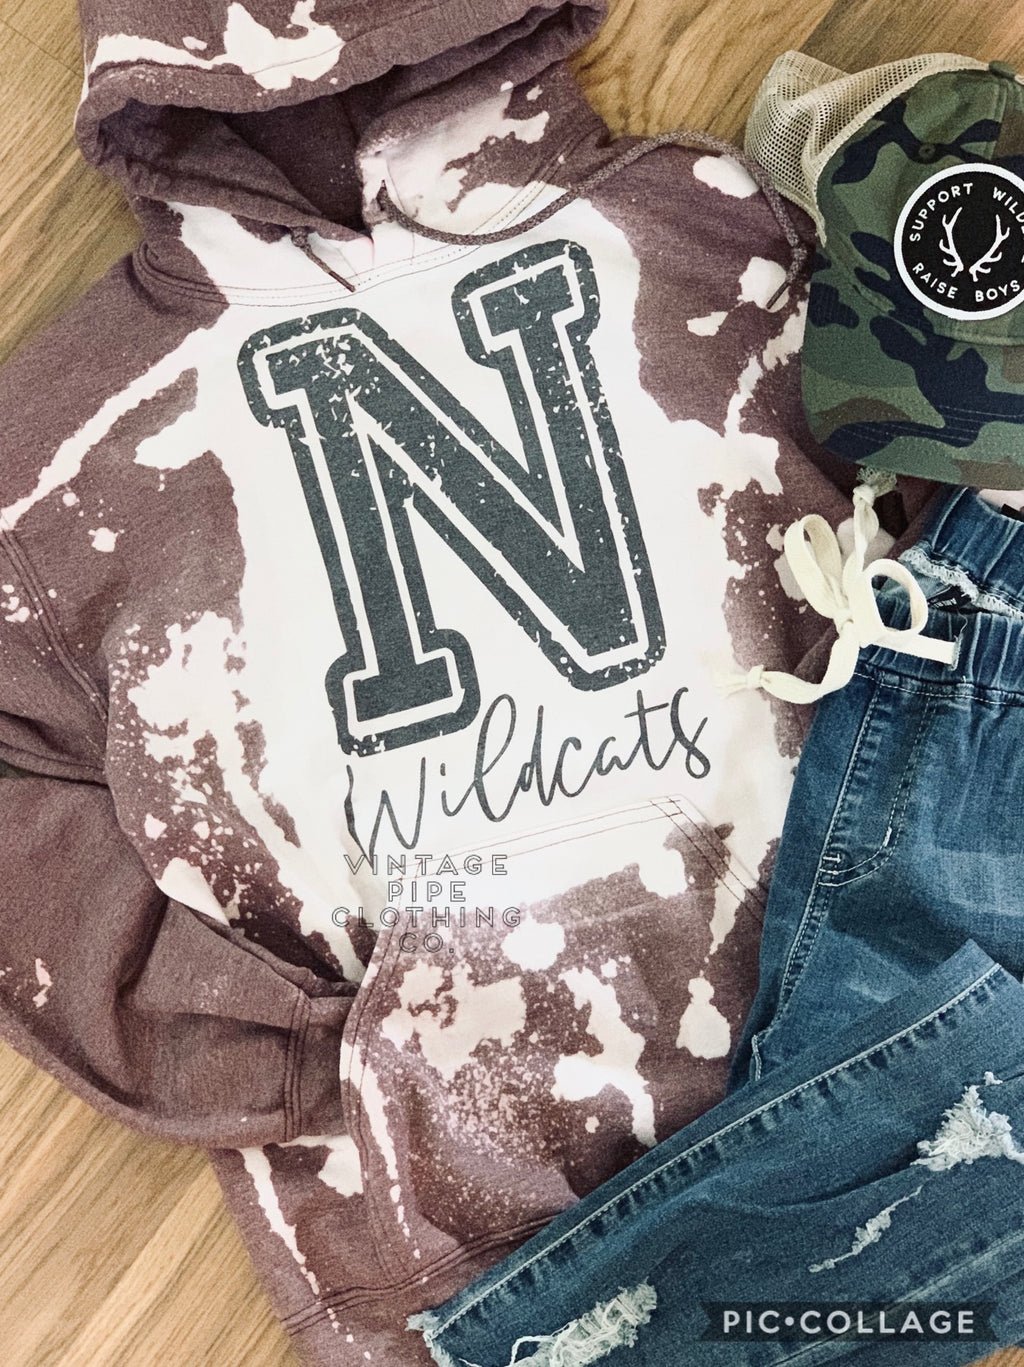 Bleached NEWARK WILDCATS Sweatshirts and Tees